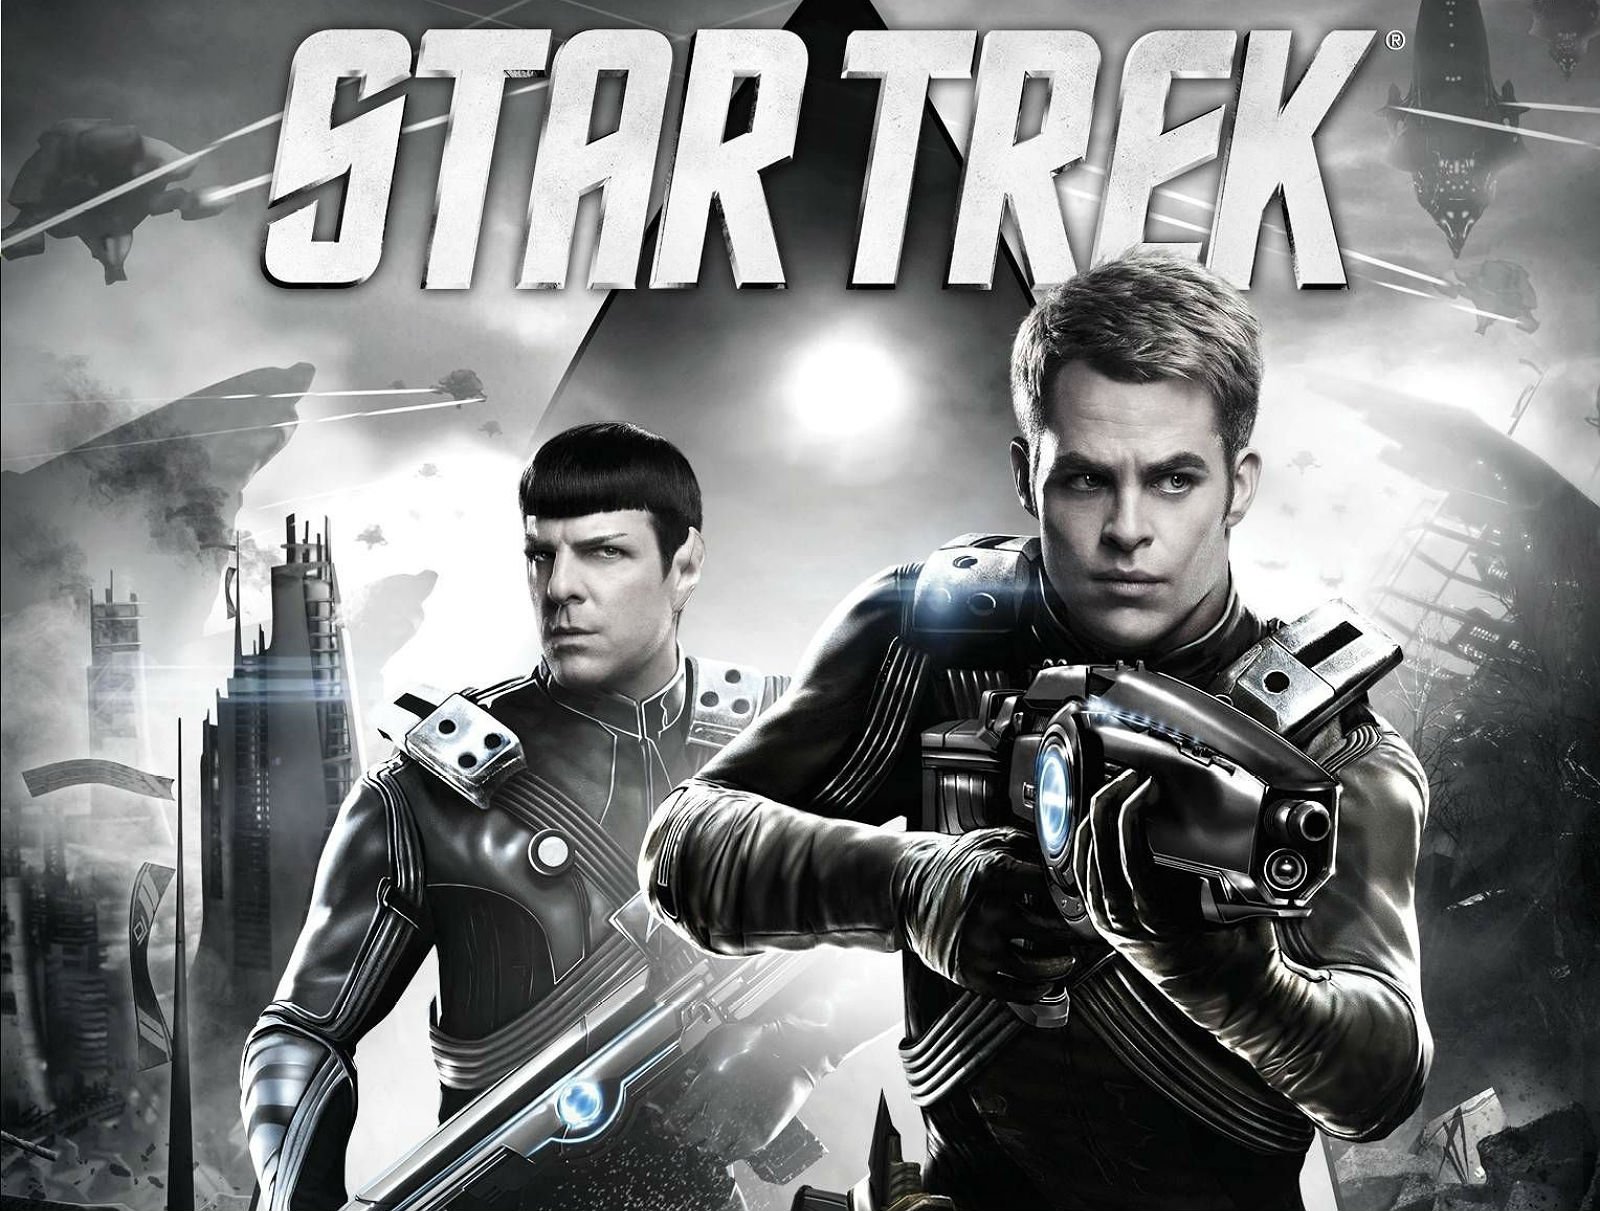 the star trek sci fi series